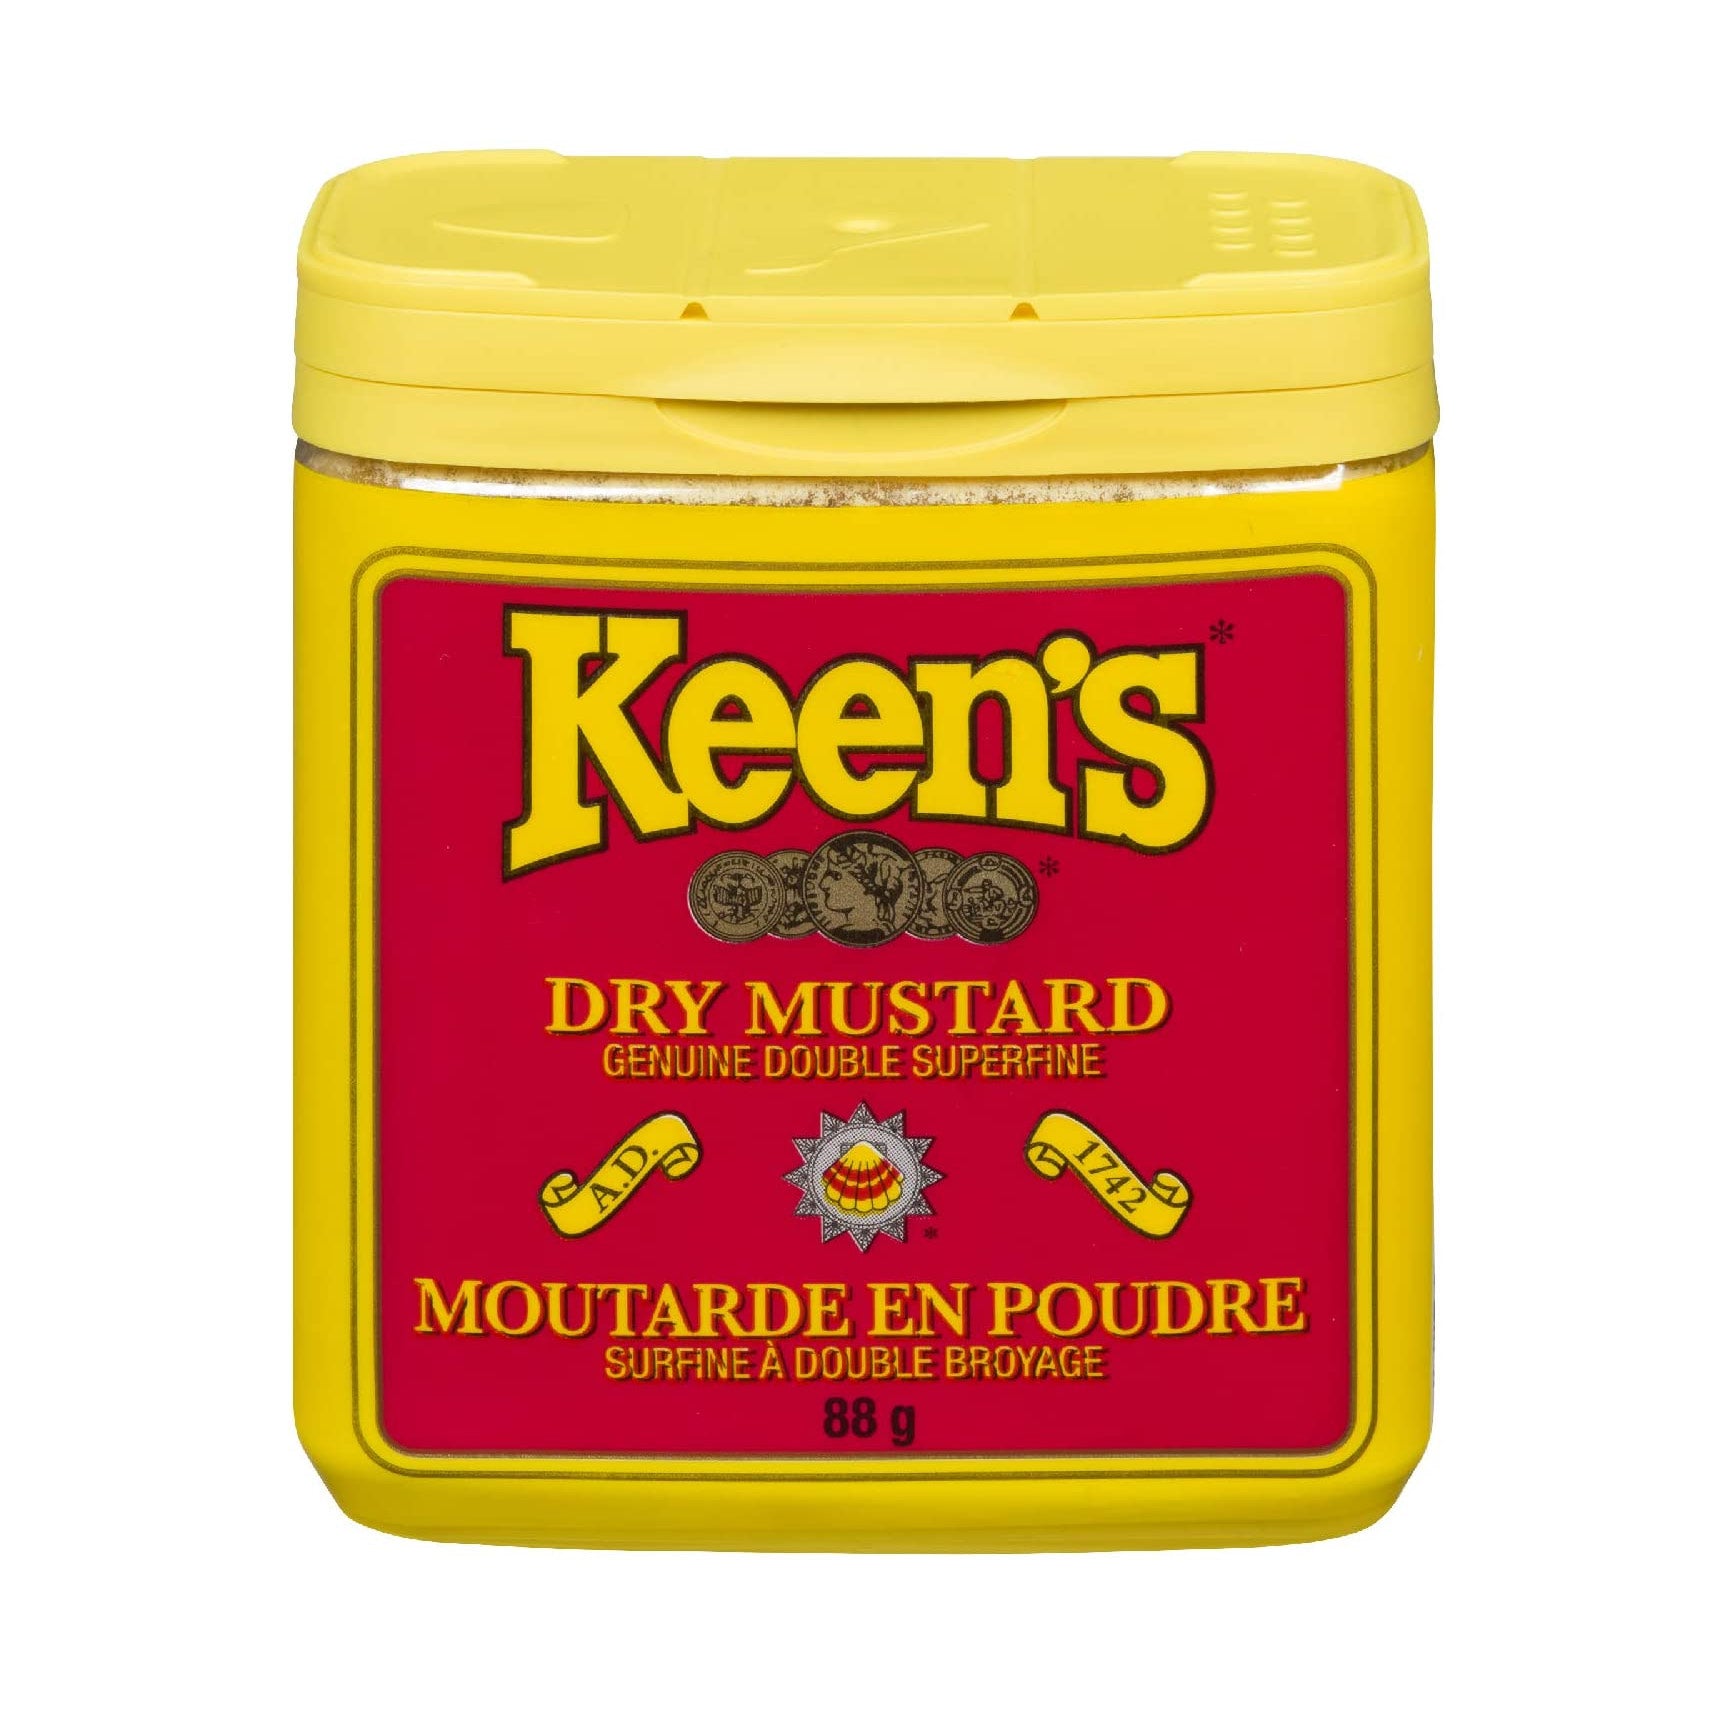 Keens Dry Mustard, 88g